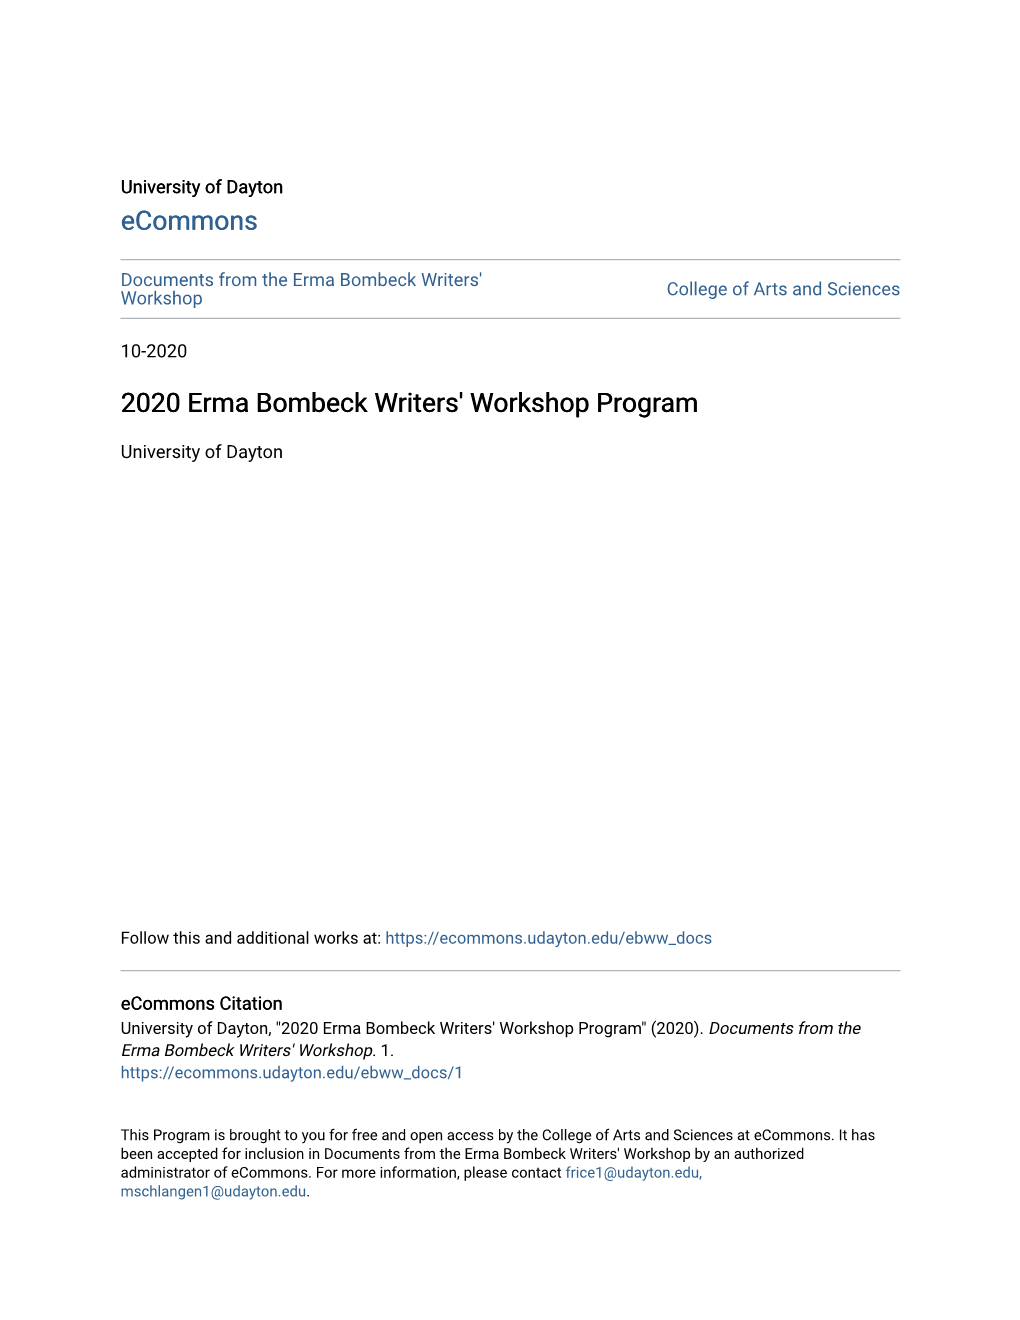 2020 Erma Bombeck Writers' Workshop Program